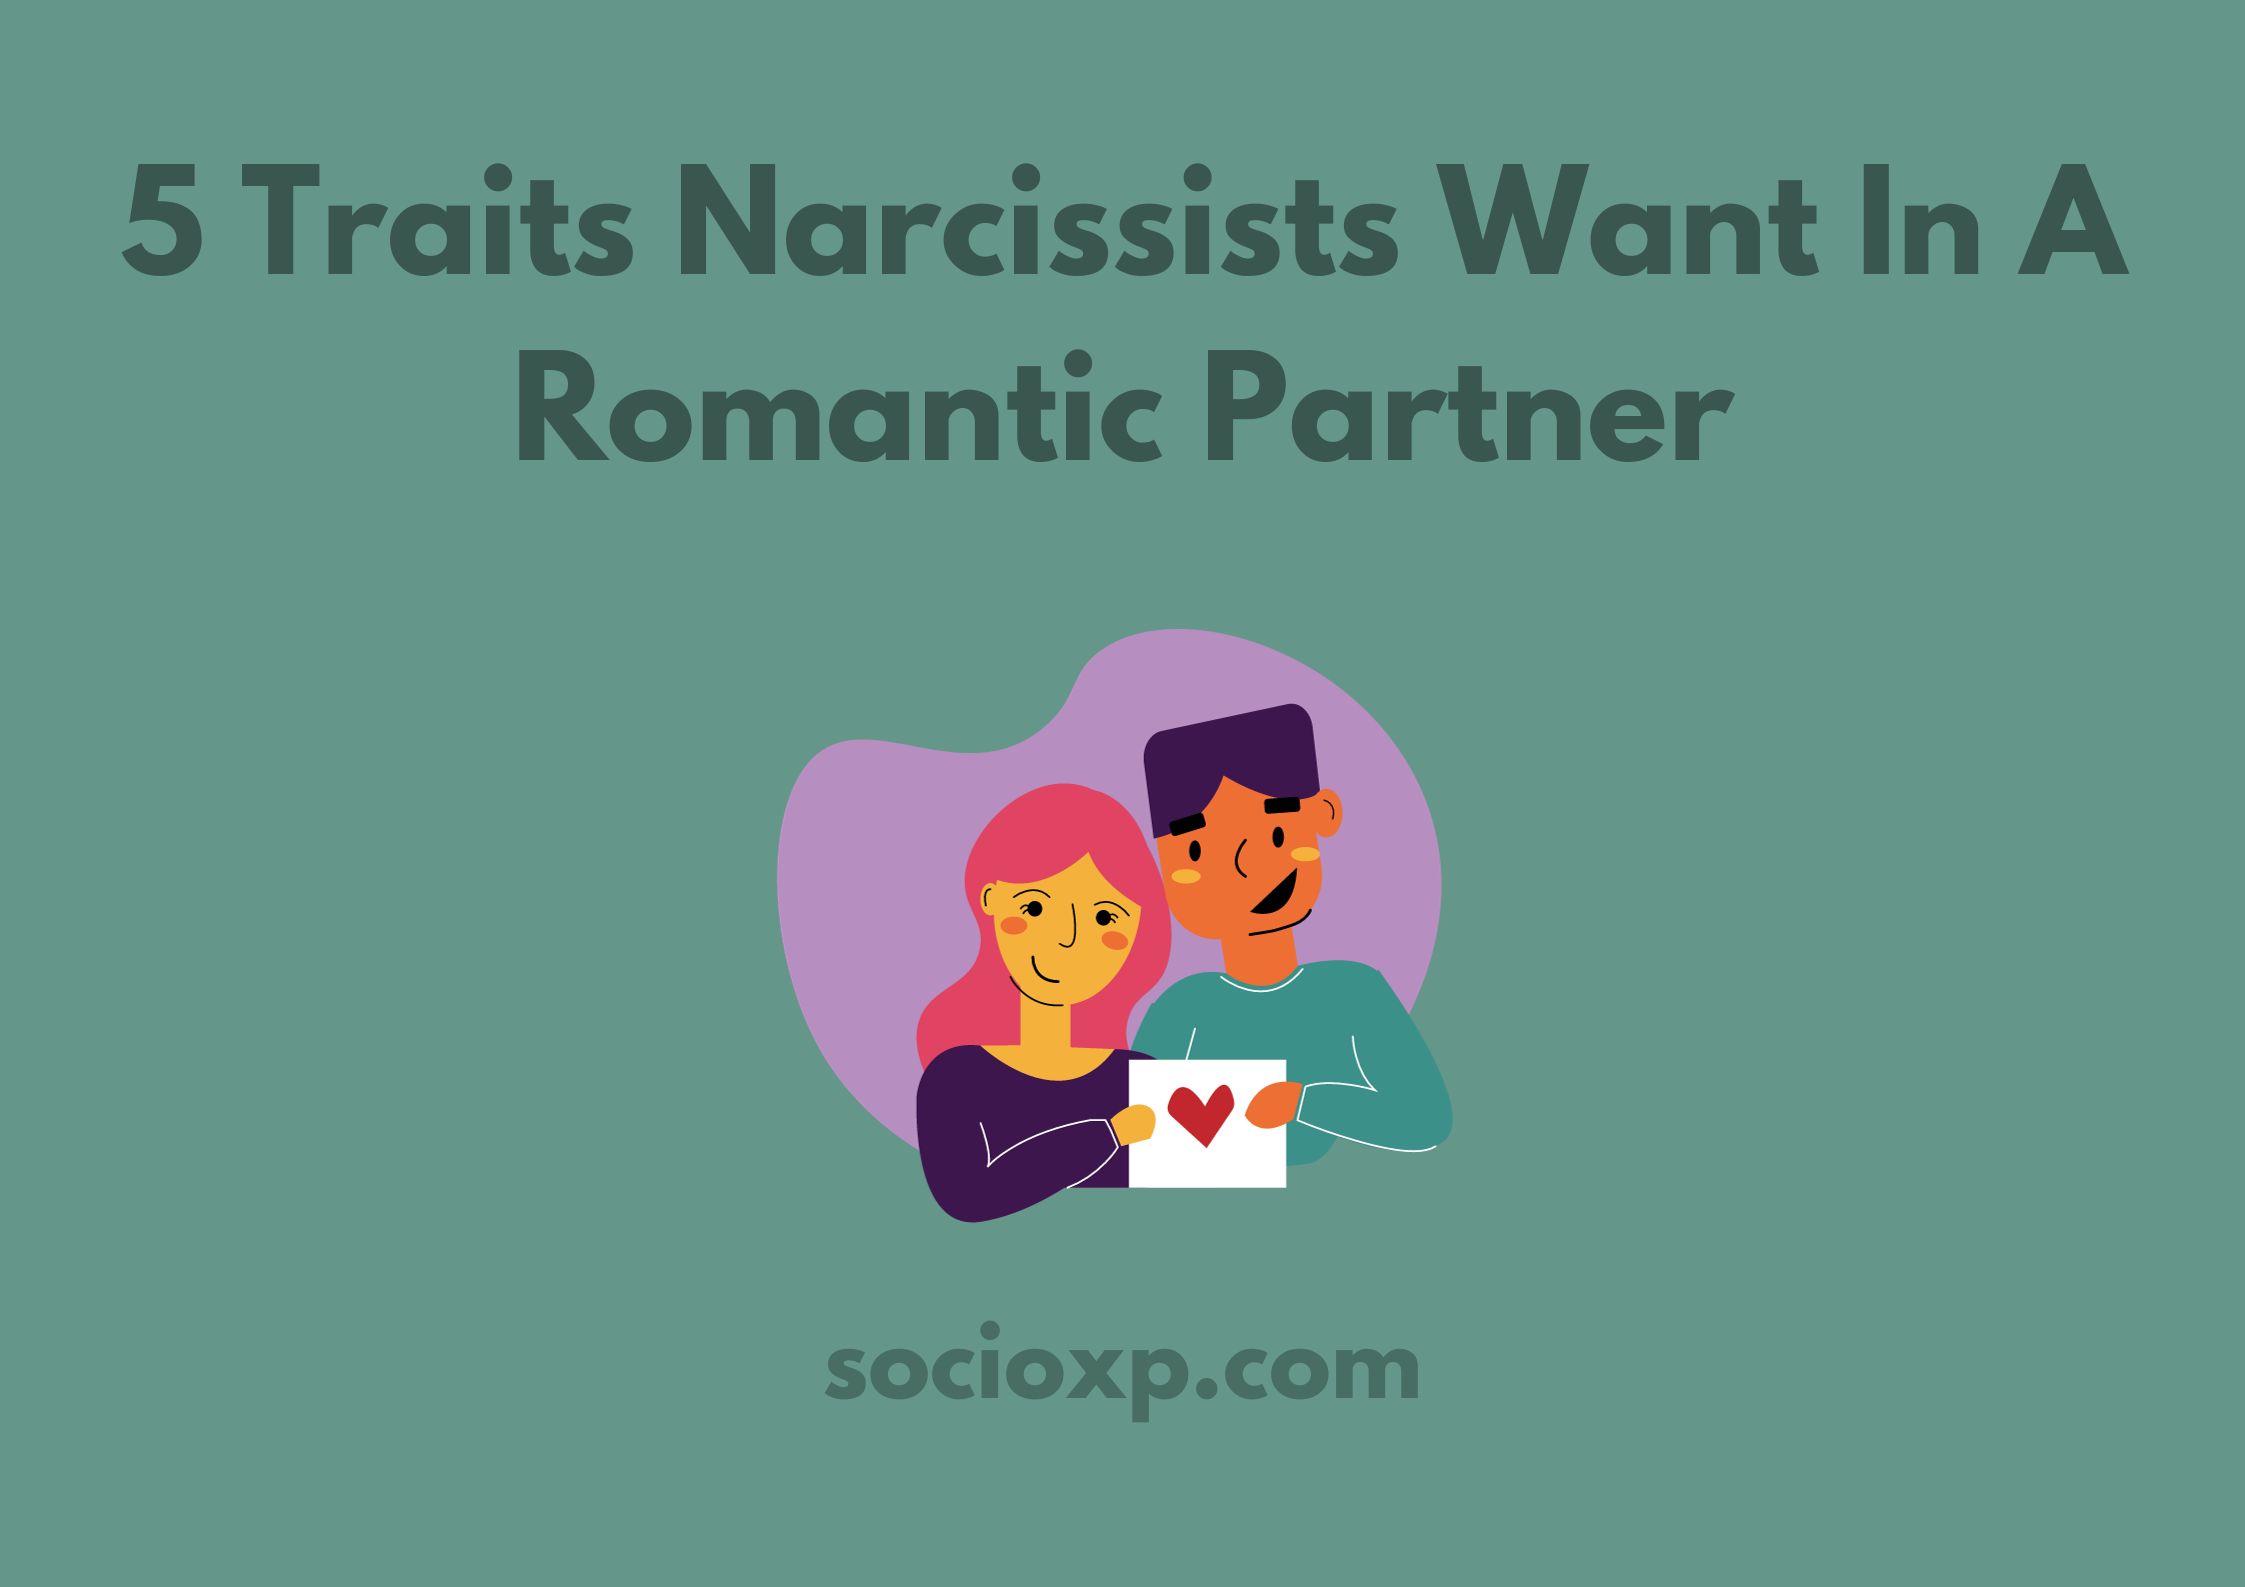 5 Traits Narcissists Want In A Romantic Partner